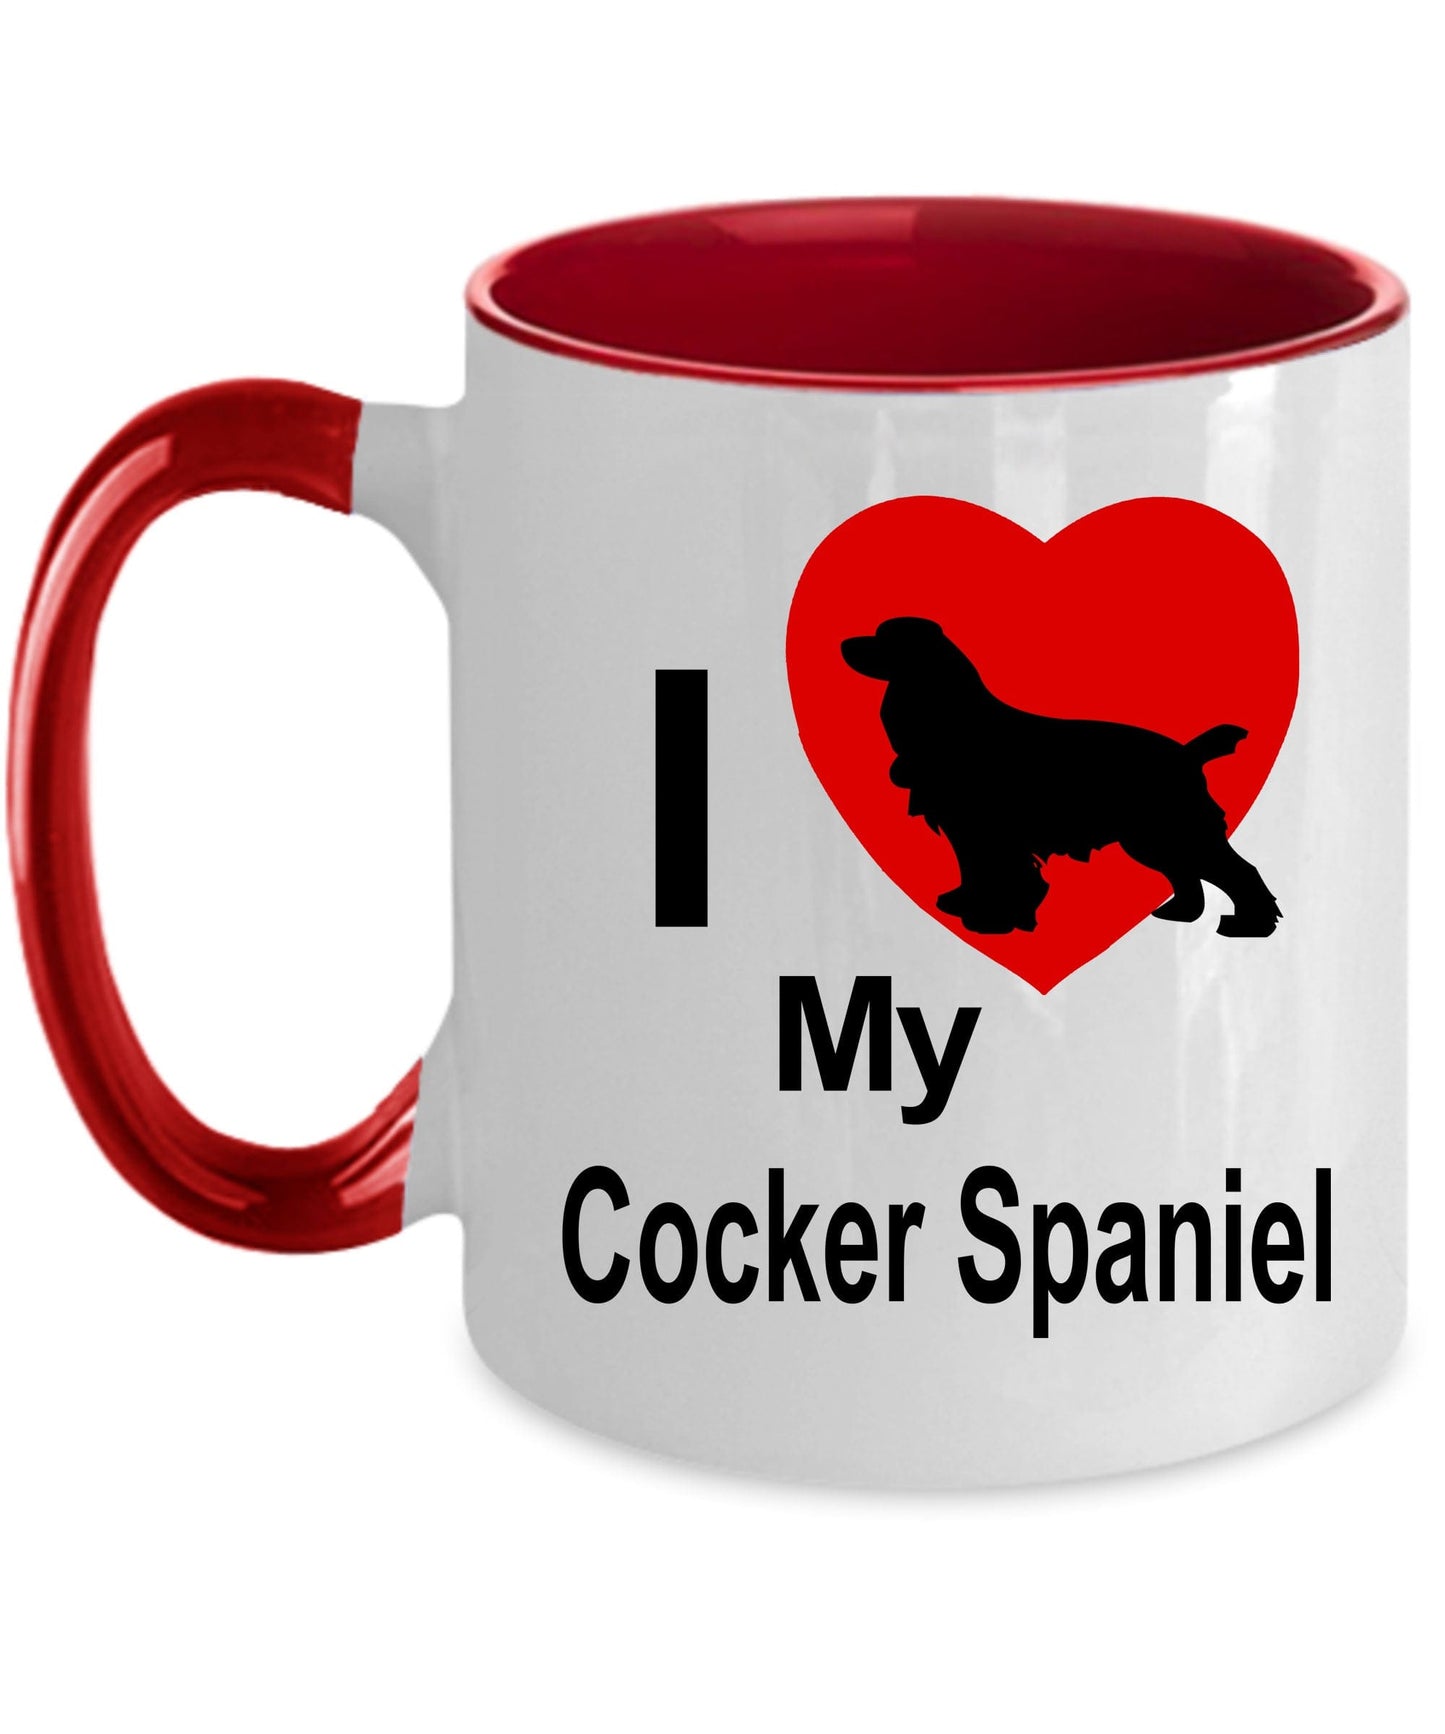 Cocker Spaniel Dog Lover Gift White Ceramic Coffee Mug